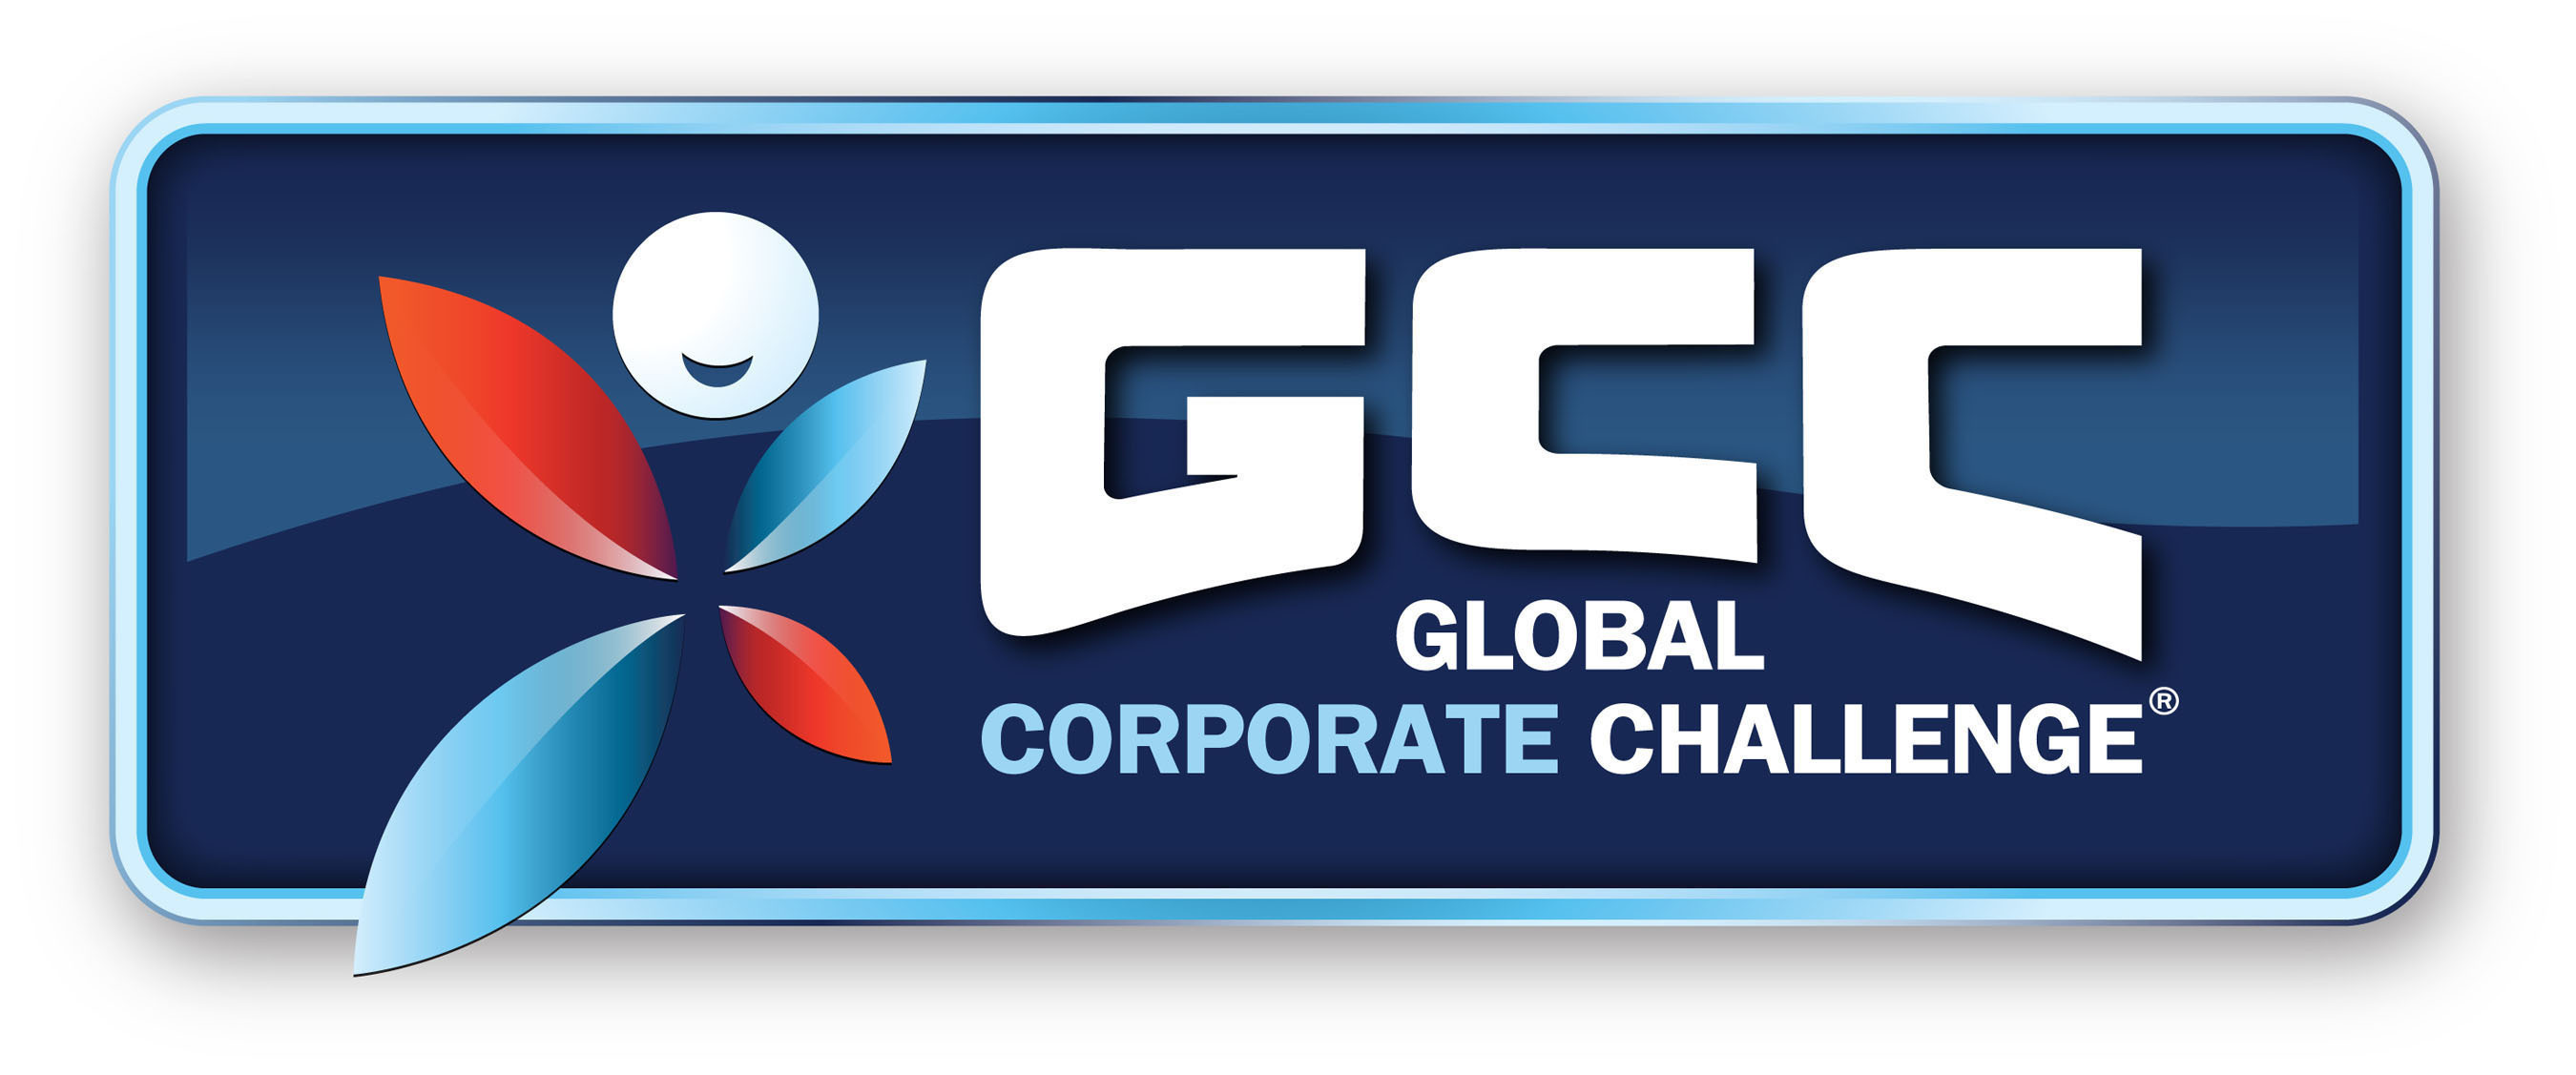 Global Corporate Challenge logo. (PRNewsFoto/Global Corporate Challenge) (PRNewsFoto/GLOBAL CORPORATE CHALLENGE)